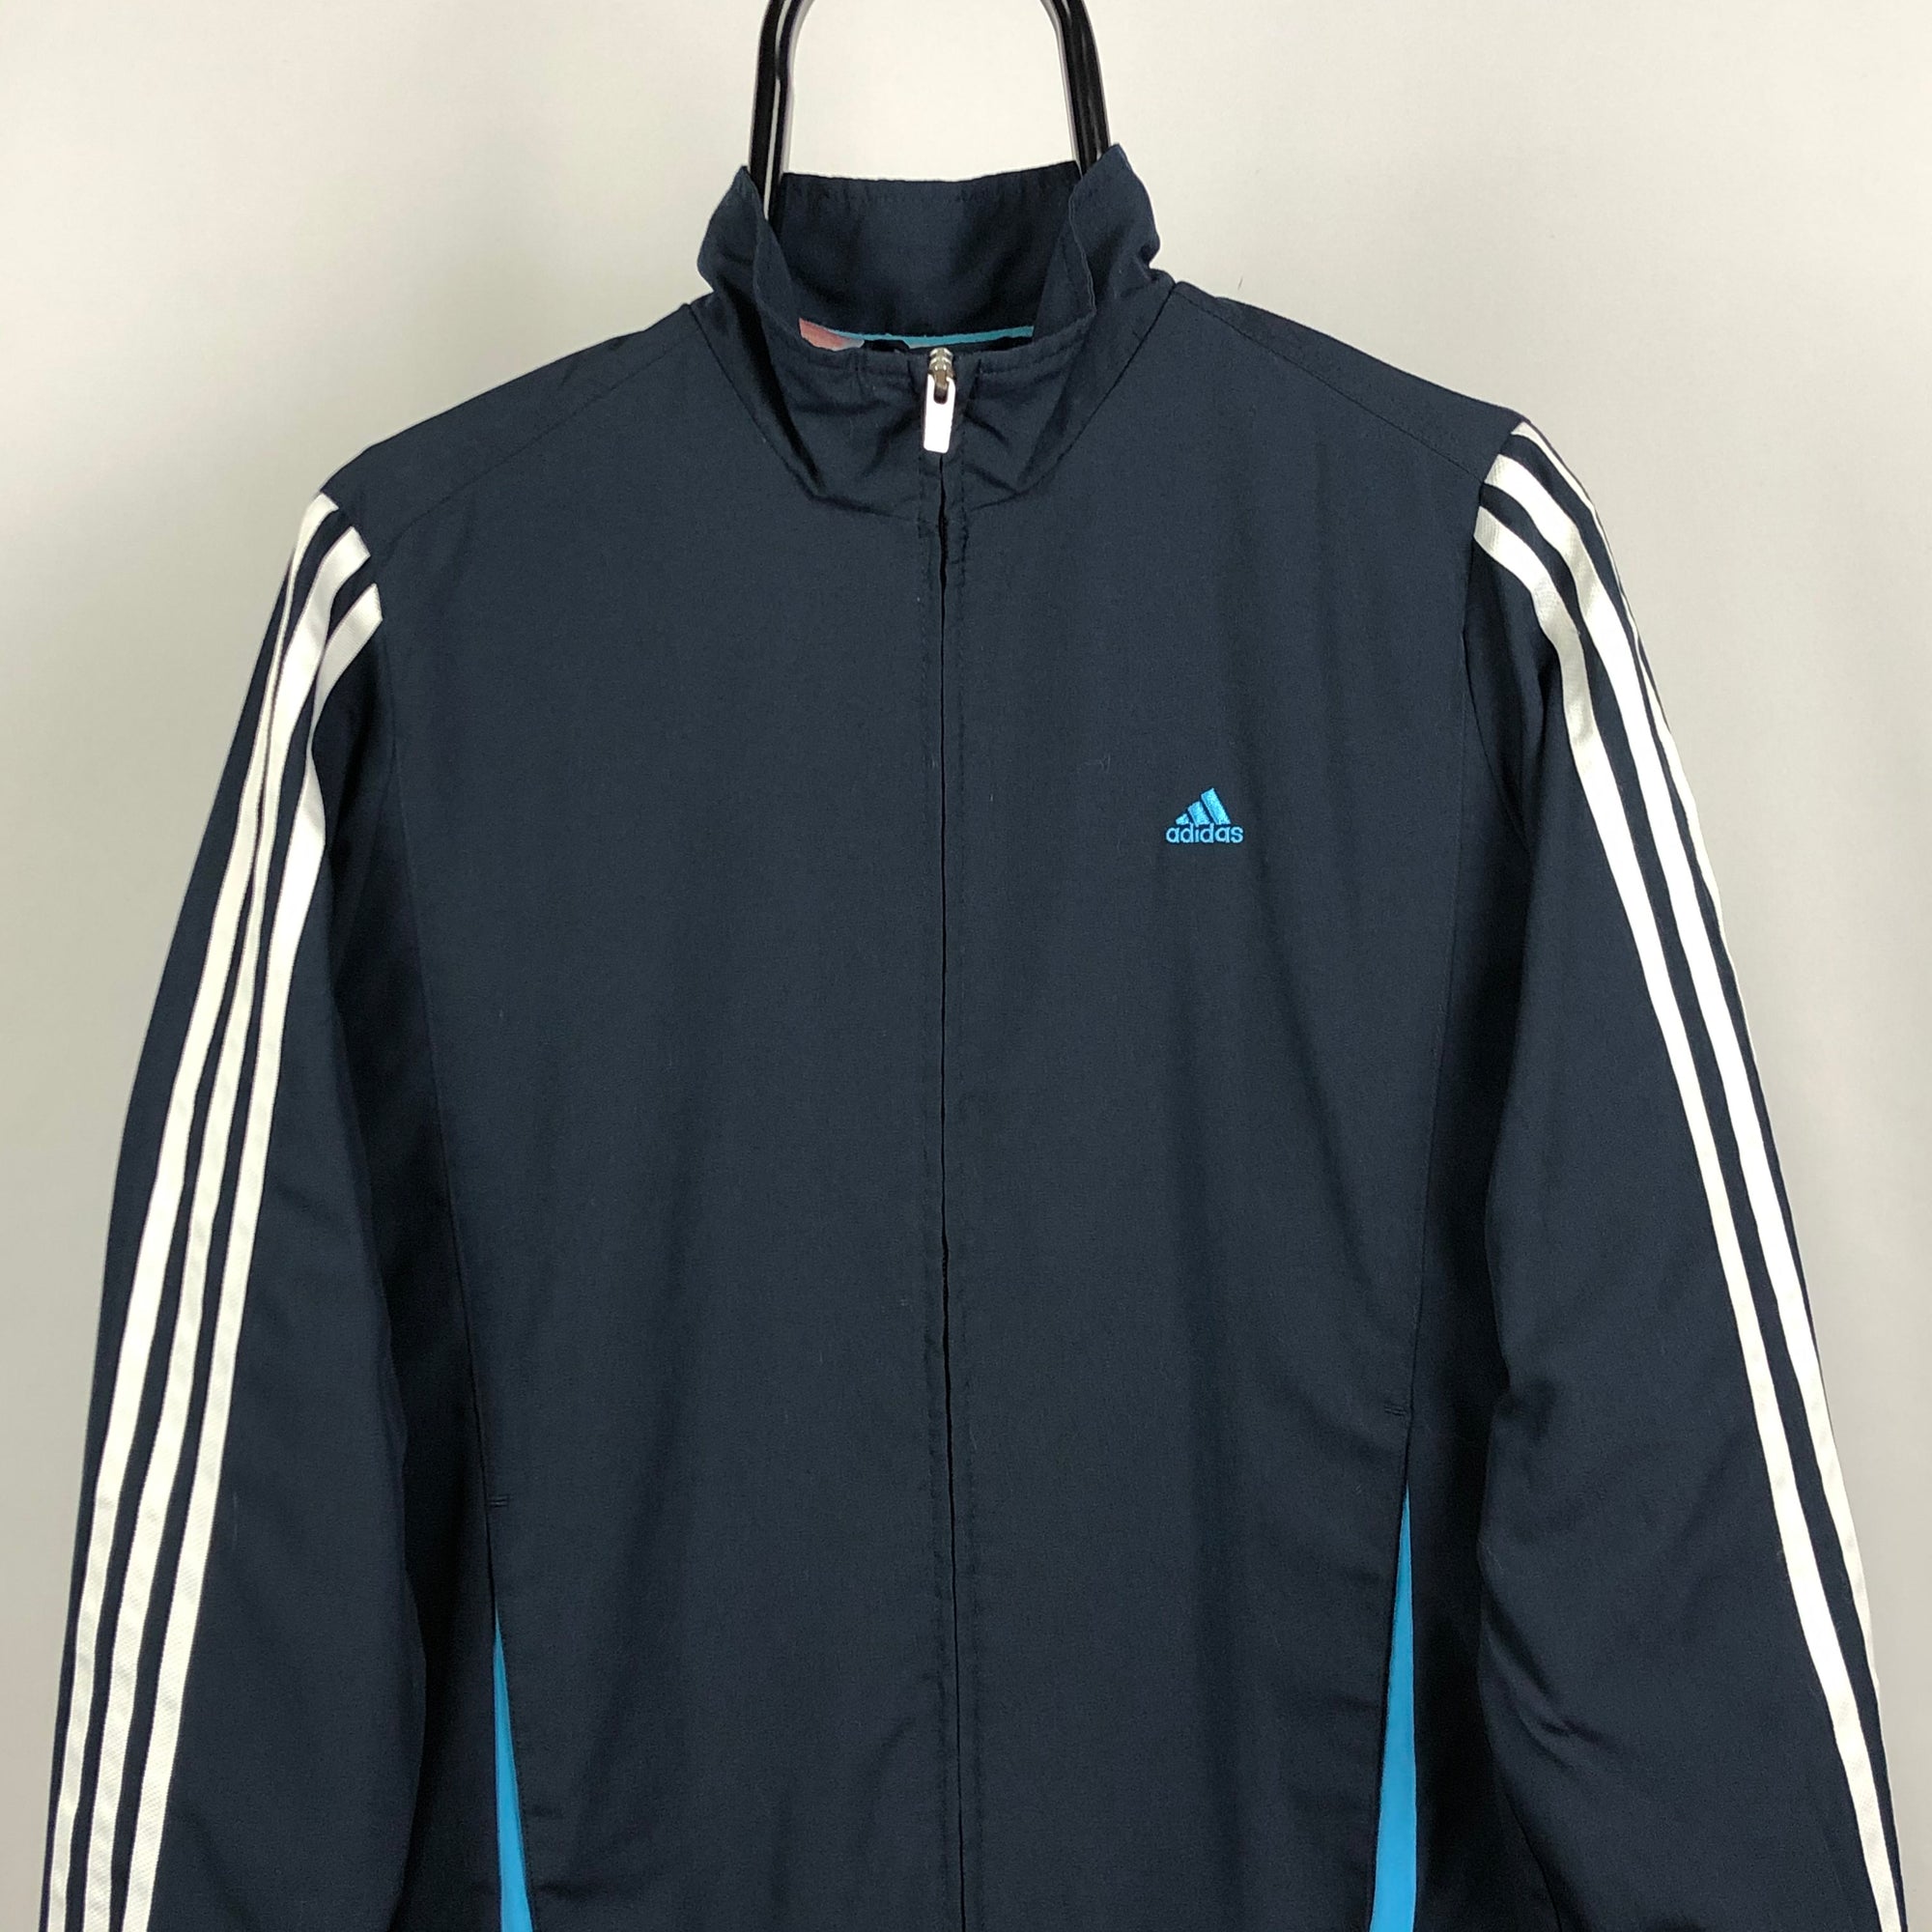 Adidas Track Jacket in Navy/White - Men's Small/Women's Medium